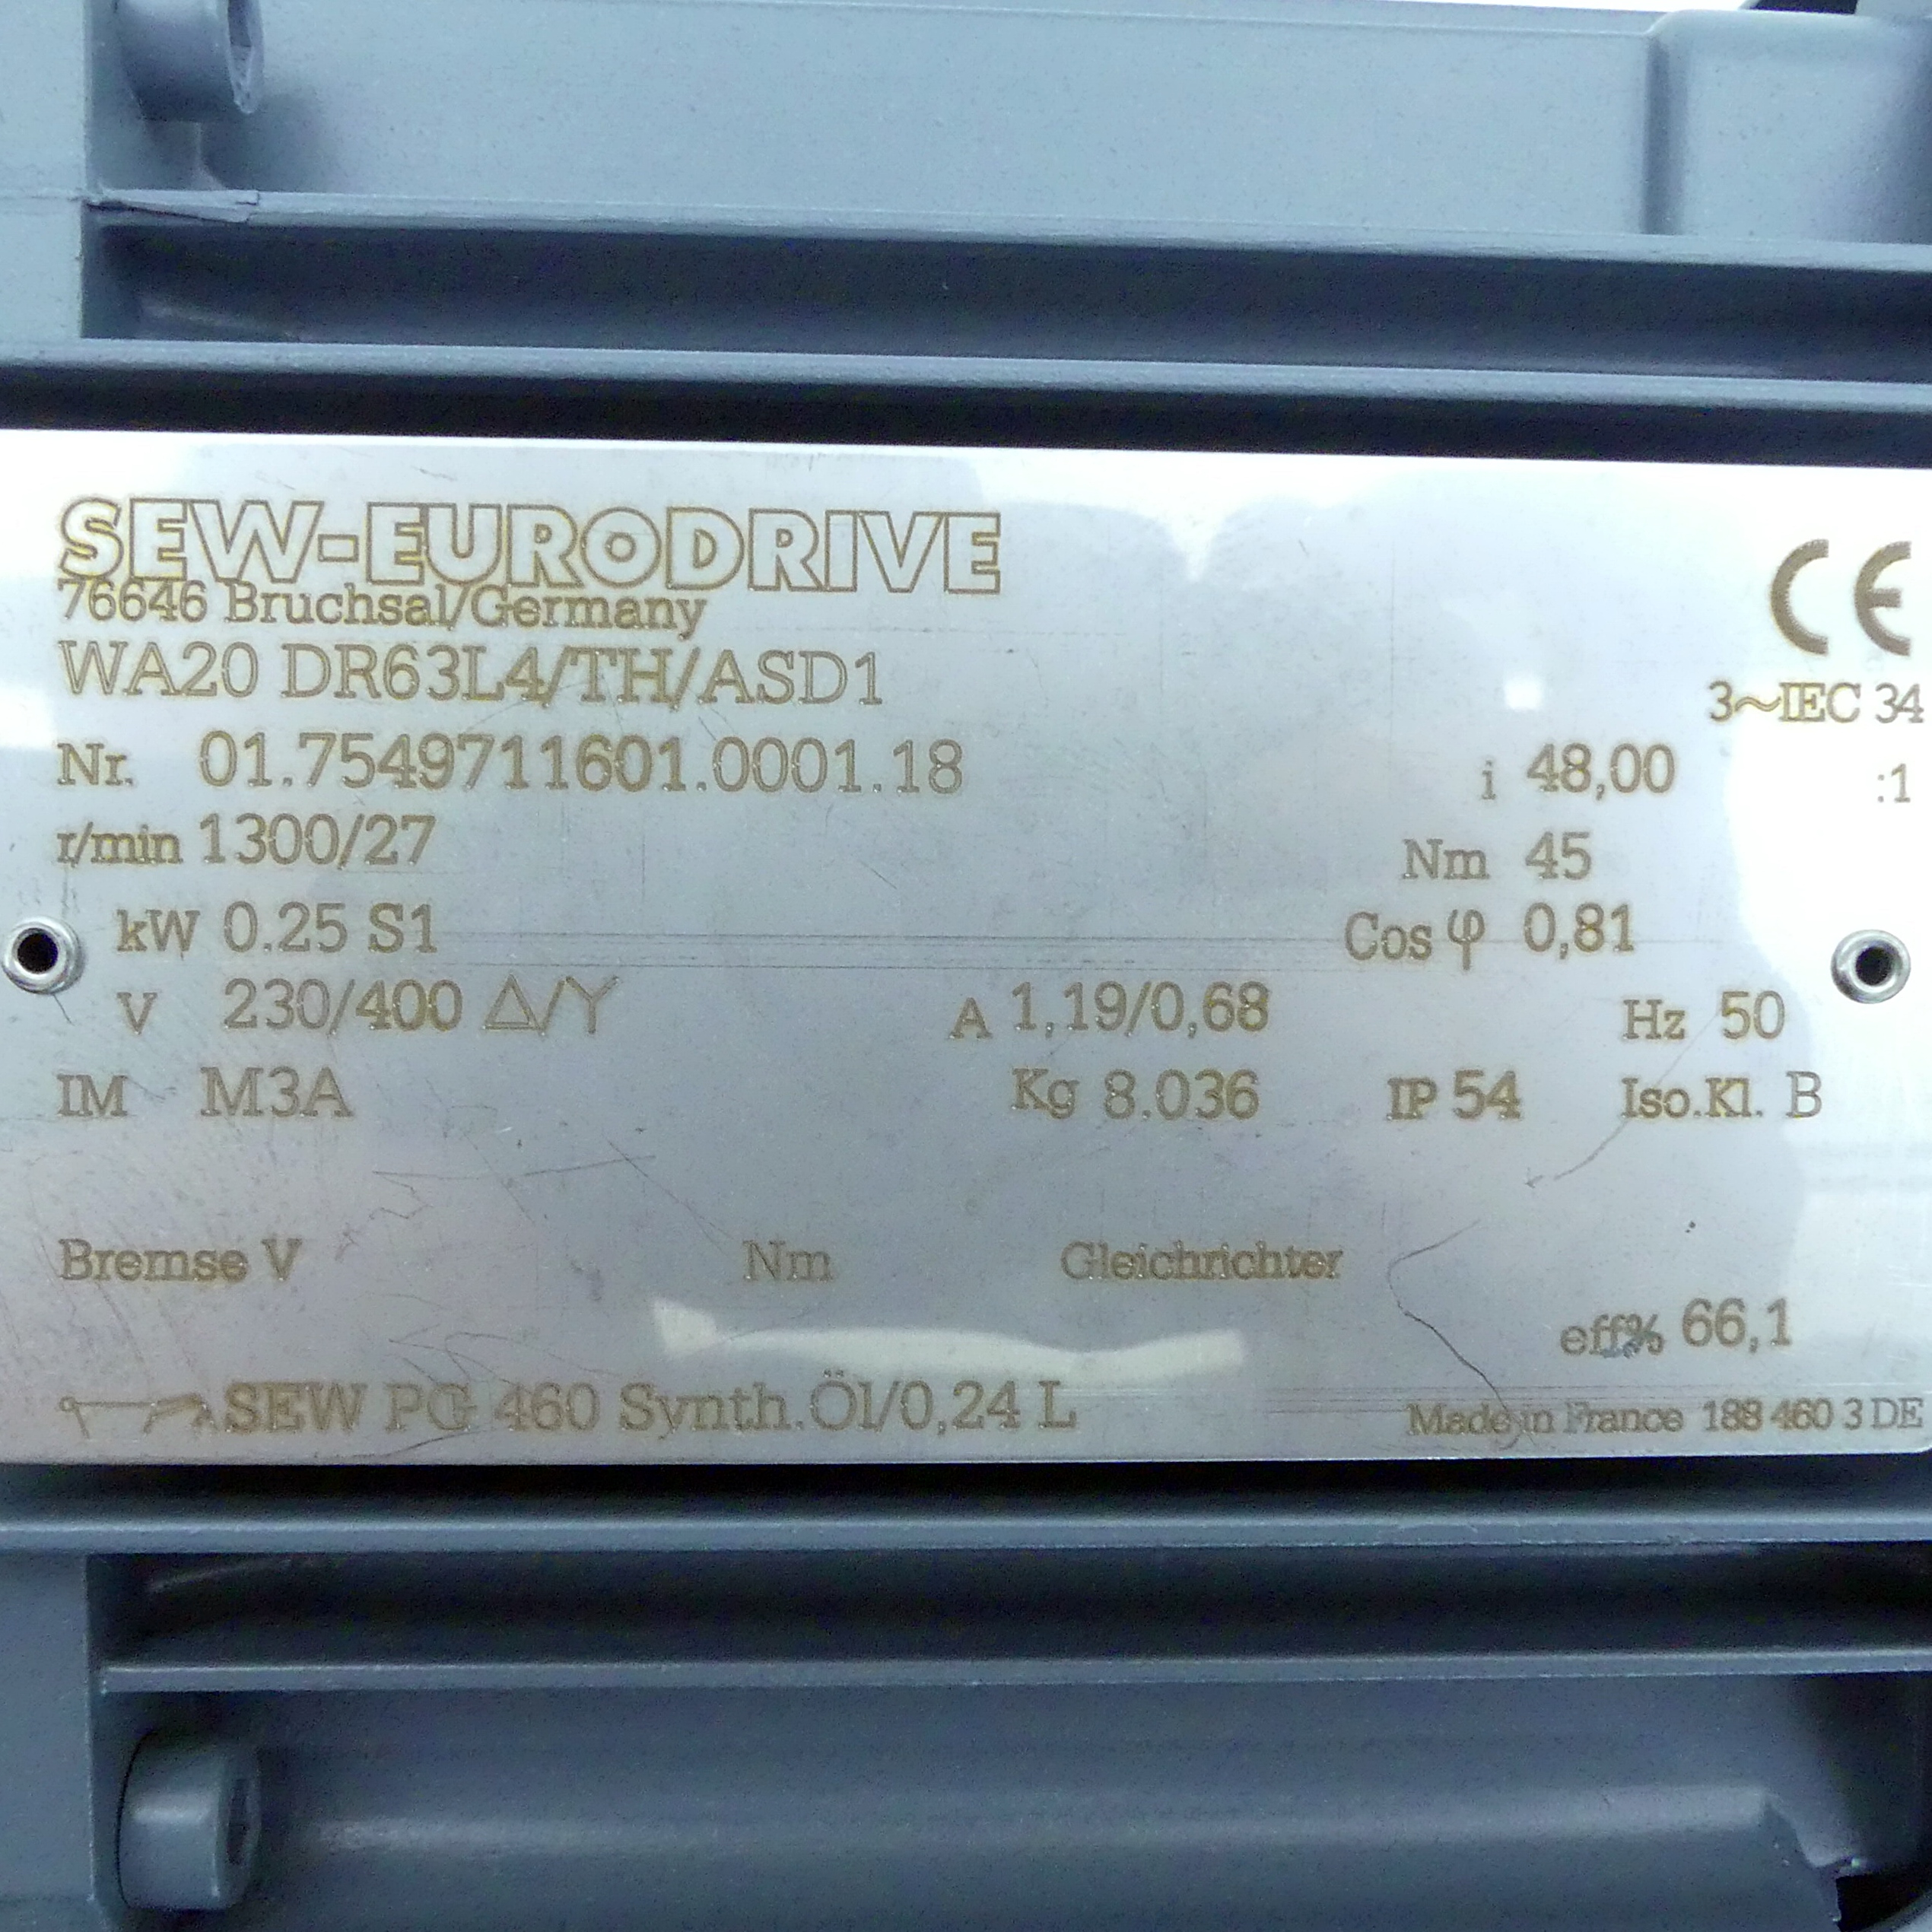 Getriebemotor WA20 DR63L4/TH/ASD1 